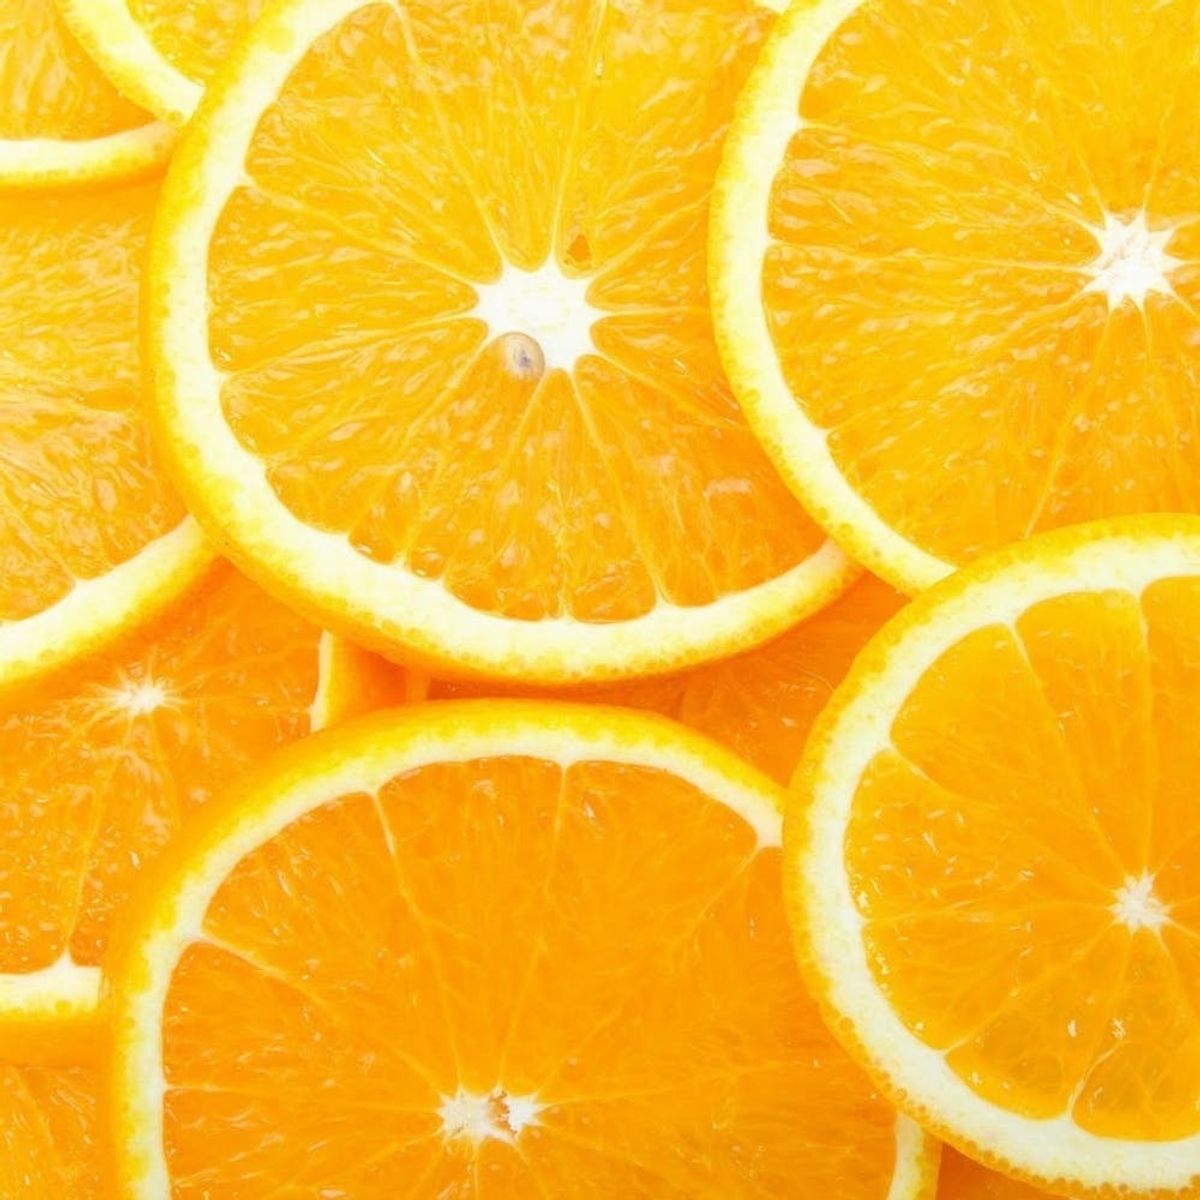 Is Vitamin C the Miracle Ingredient We Think?